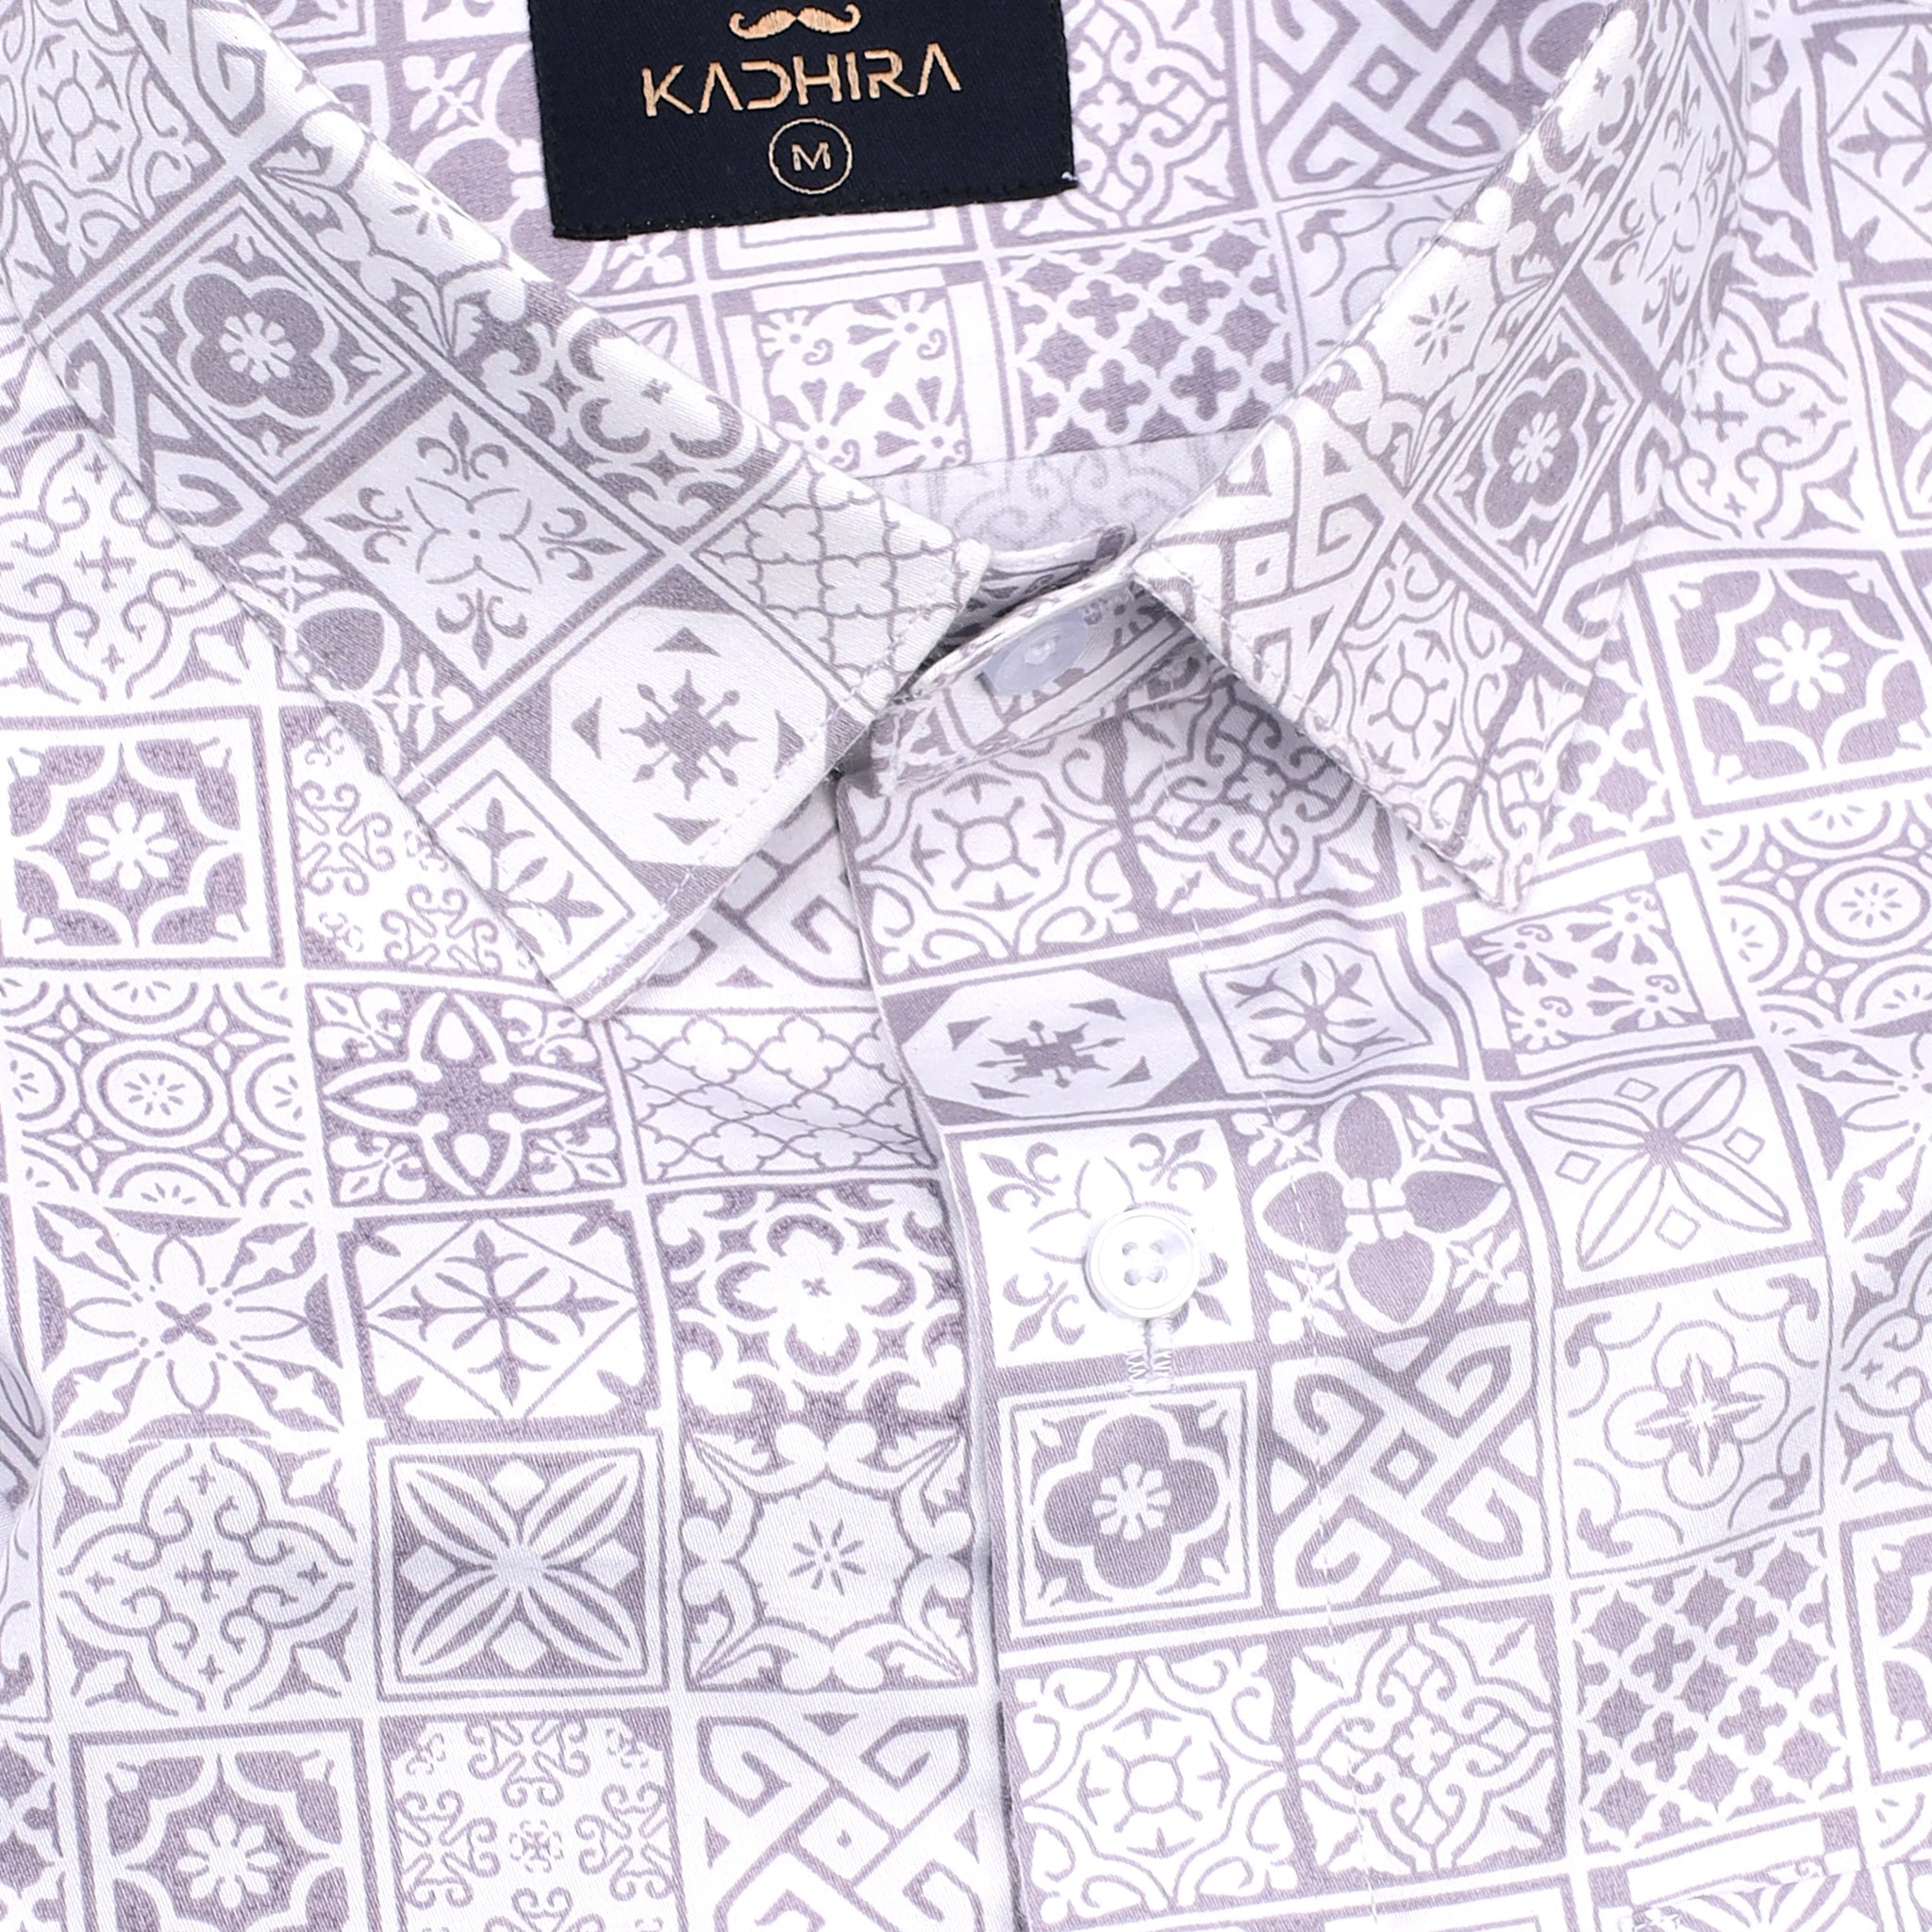 Thistle Purple Designer Patterns Super Premium Cotton Shirt